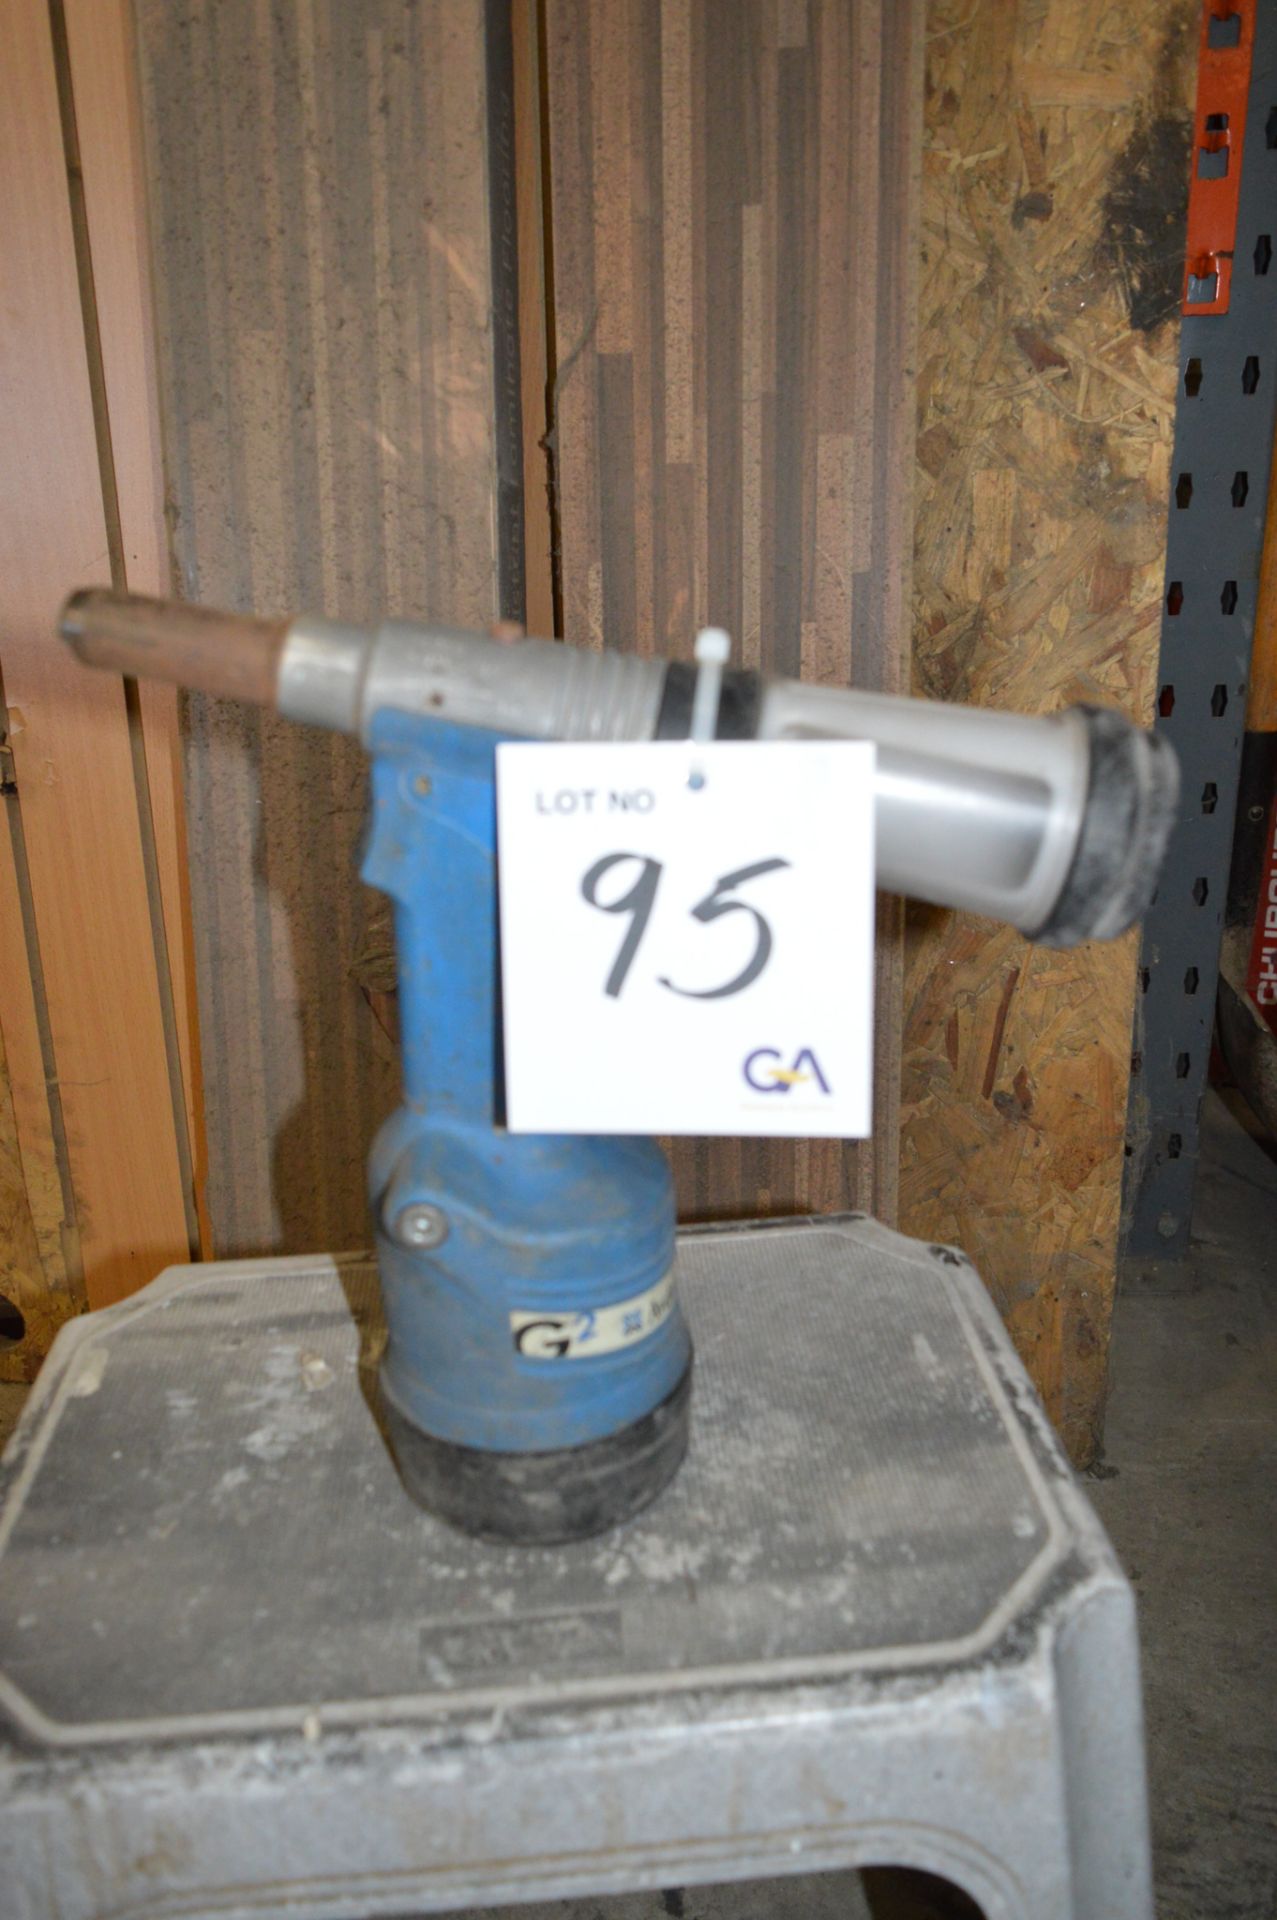 Avdel pneumatic rivet gun Model G2 ** No VAT on hammer price but VAT will be charged on the buyer'